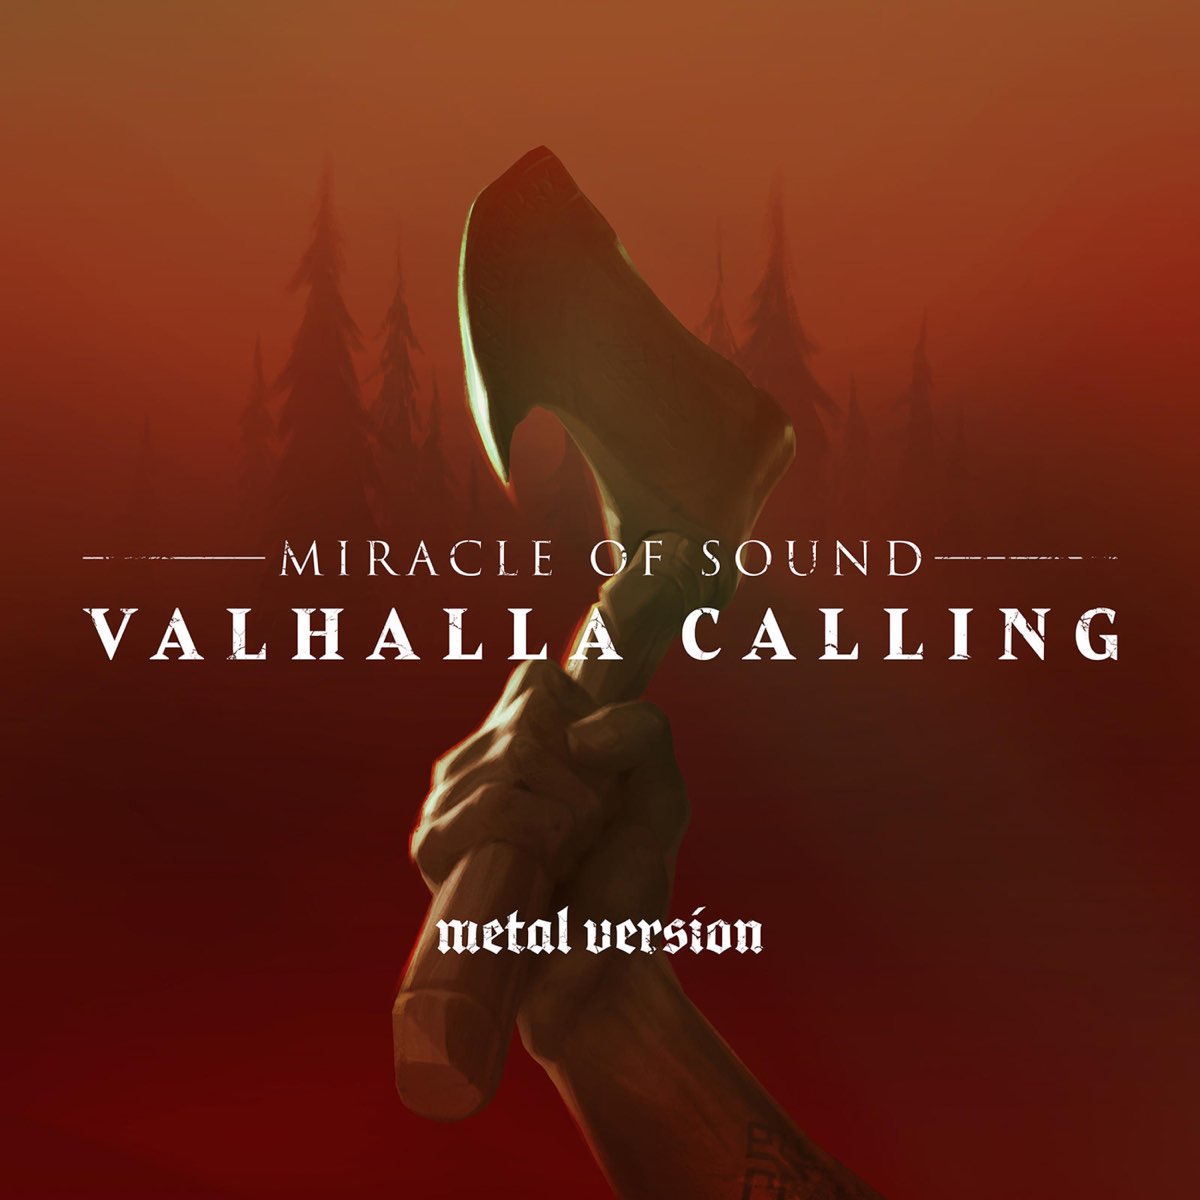 Valhalla calling песня. Peyton Parrish Вальгалла. Valhalla calling. Miracle of Sound Valhalla calling. Peyton Parrish Valhalla calling.